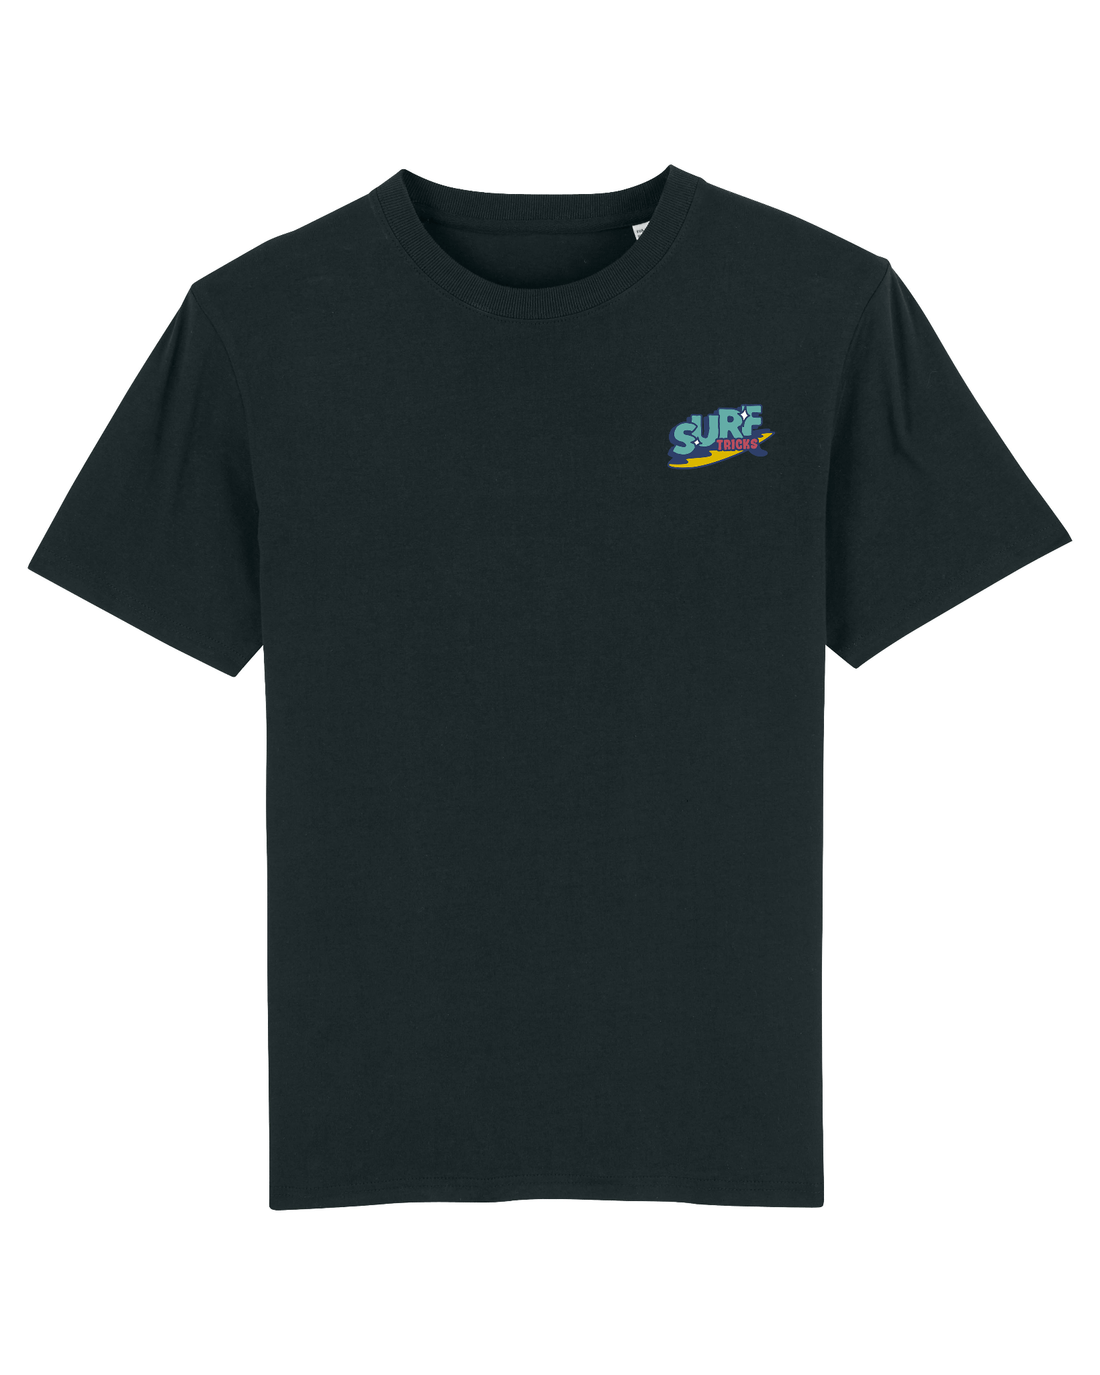 Black Skater T-Shirt, Surf Tricks Front Print